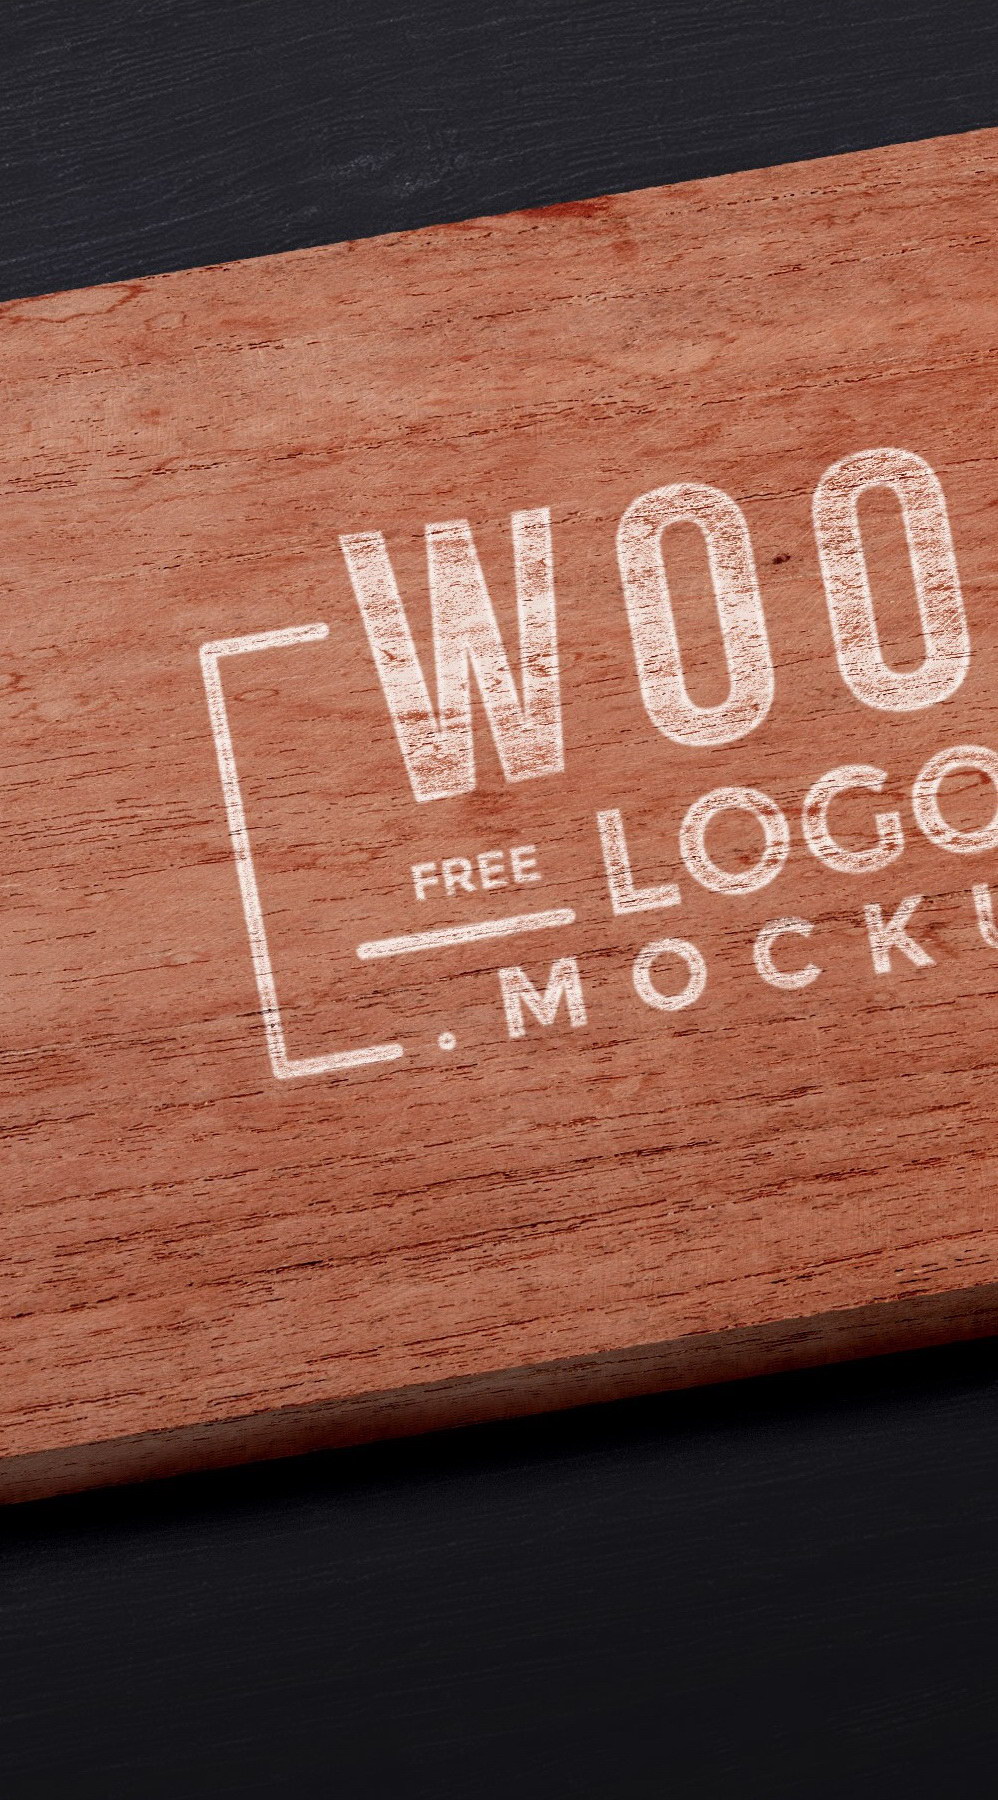 Wood Logo Mockup PSD